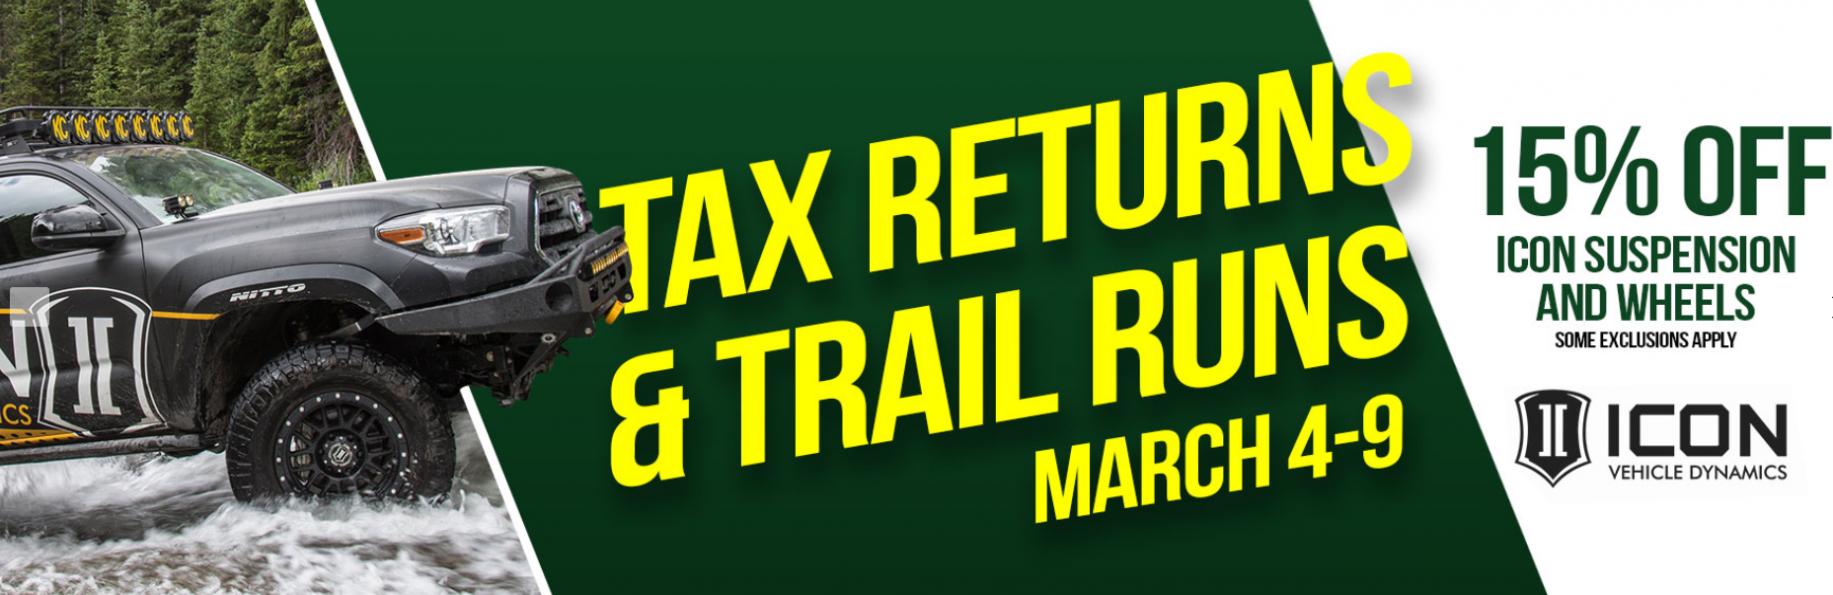 IVD Tax Returns and Trail Runs Sale!-ivd-march-sale-jpg